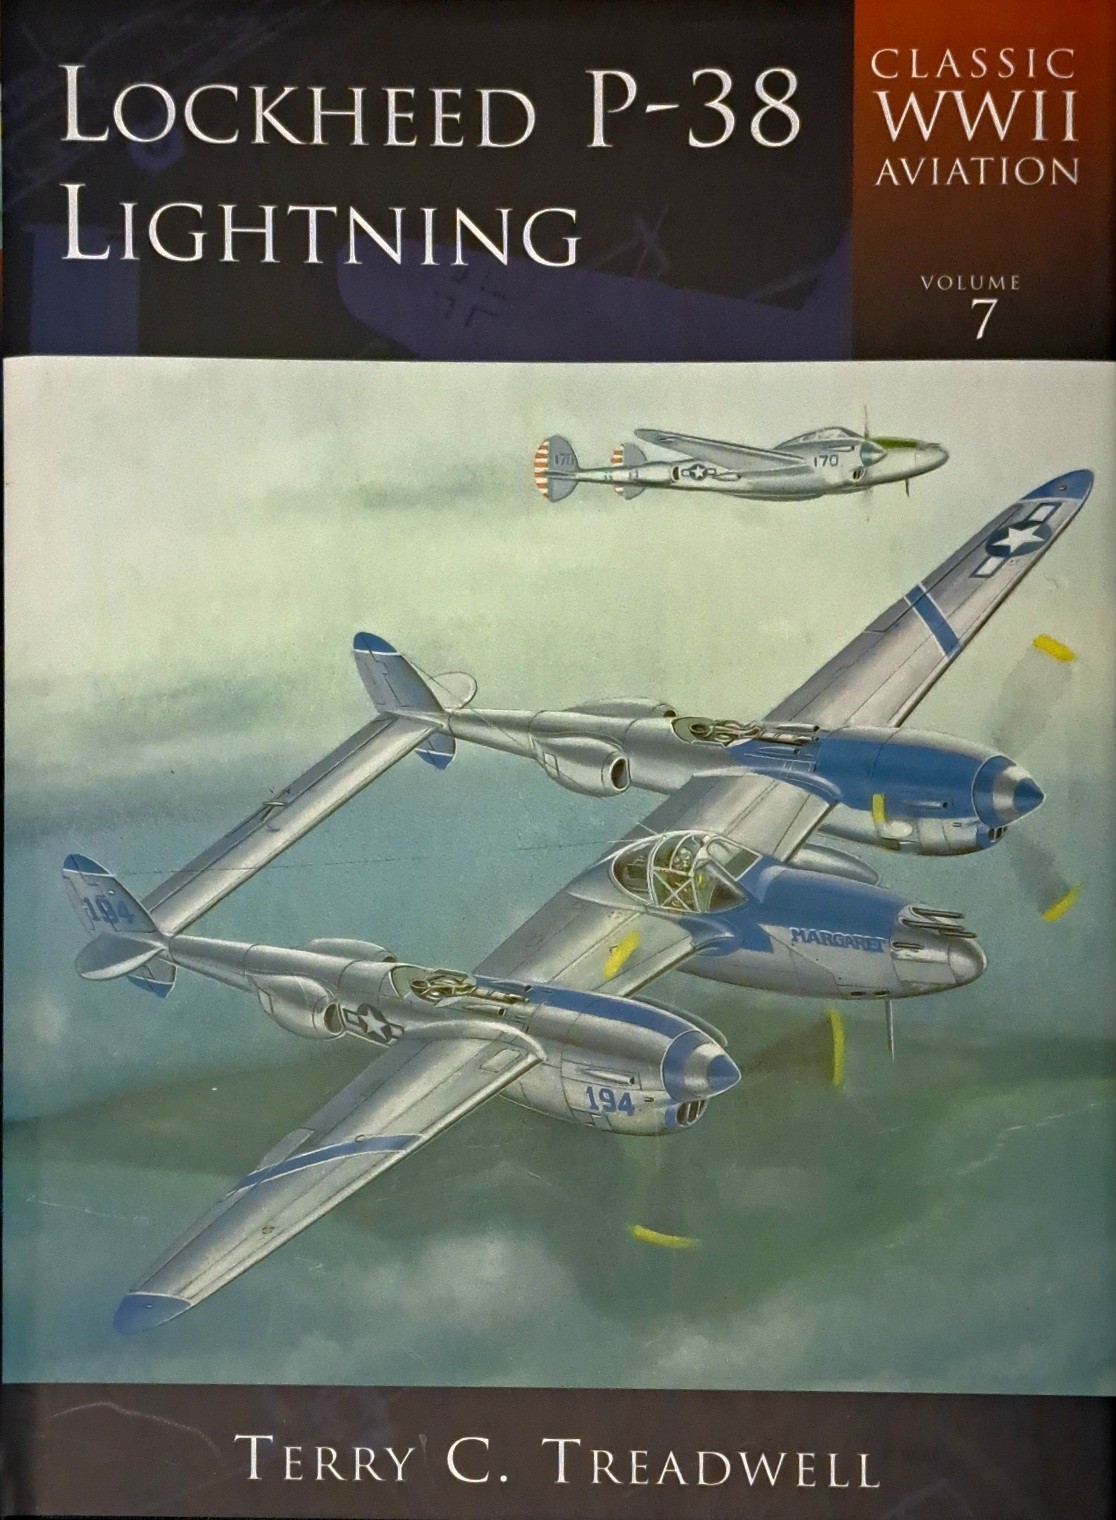 P-38 Lightning (Classic WWII Aviation) 